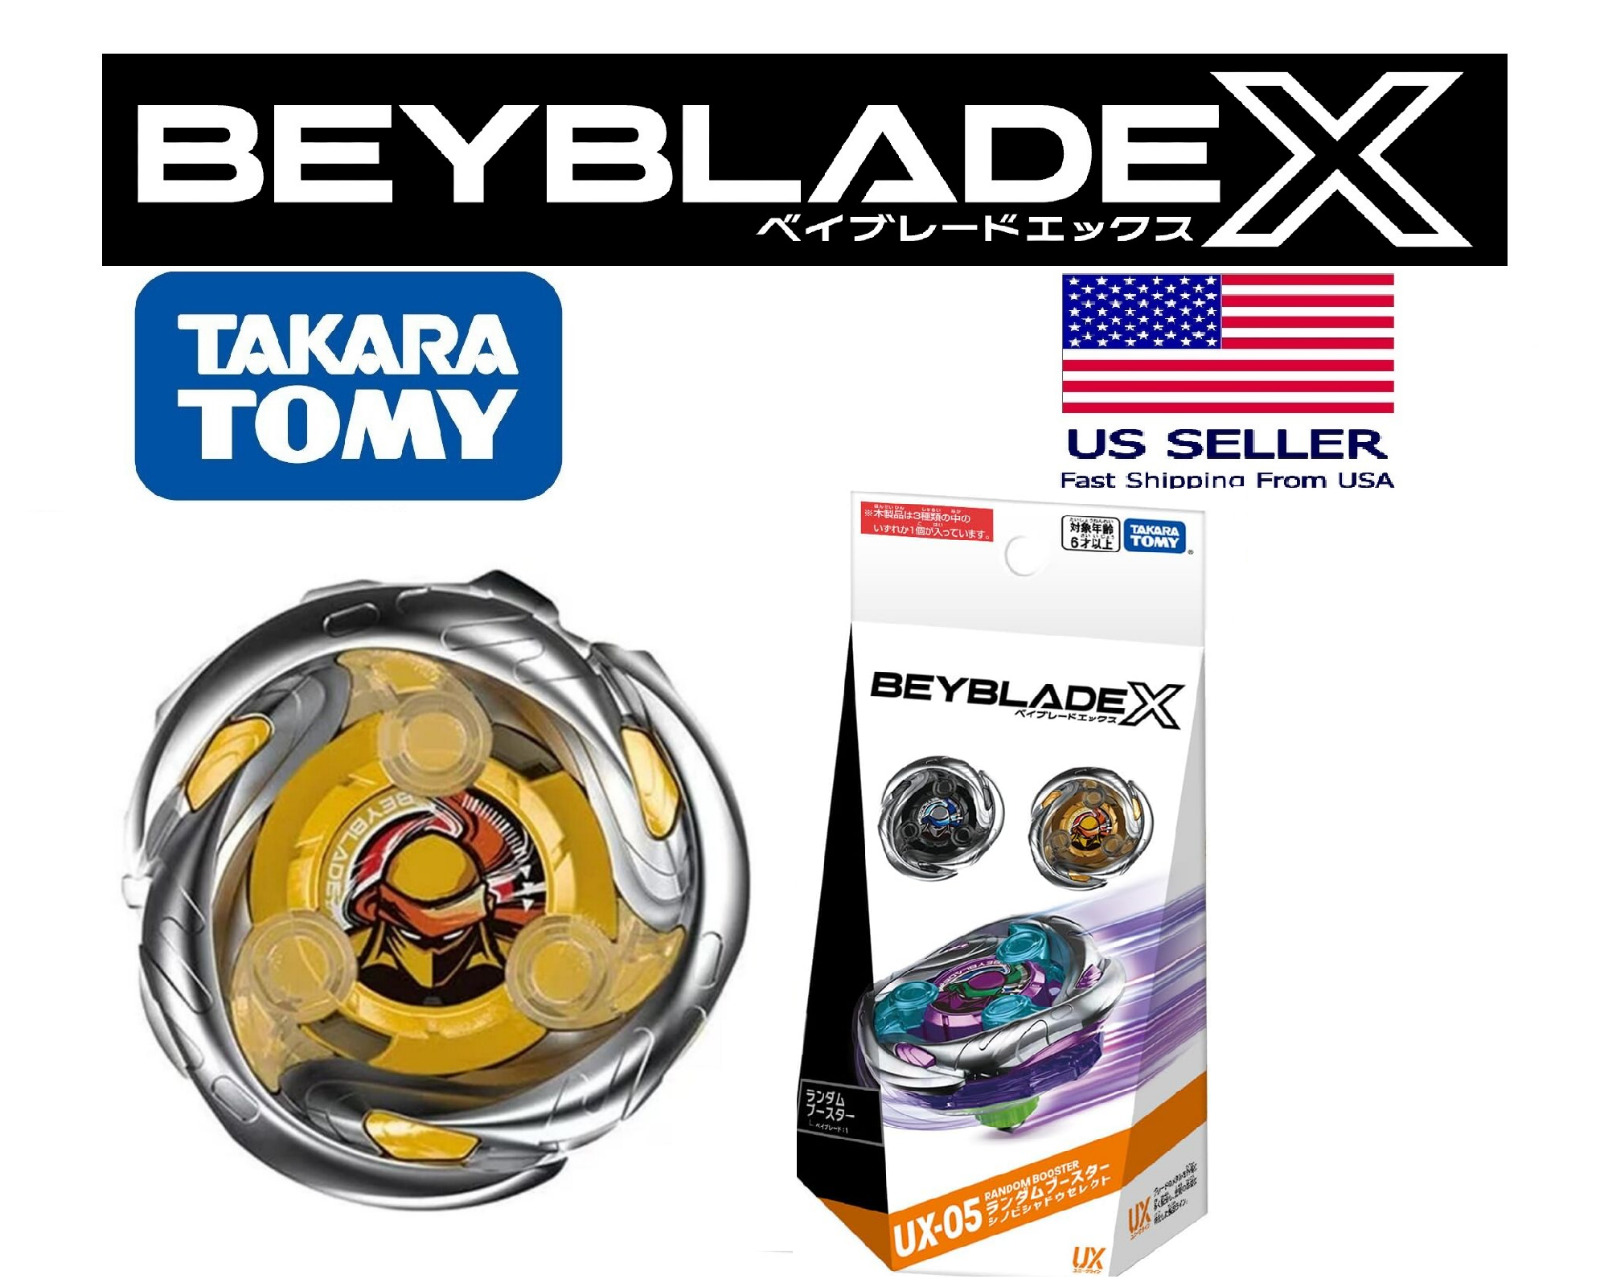 Takara Tomy Beyblade X UX-05 03 Shinobi Shadow 3-70GP Confirmed.